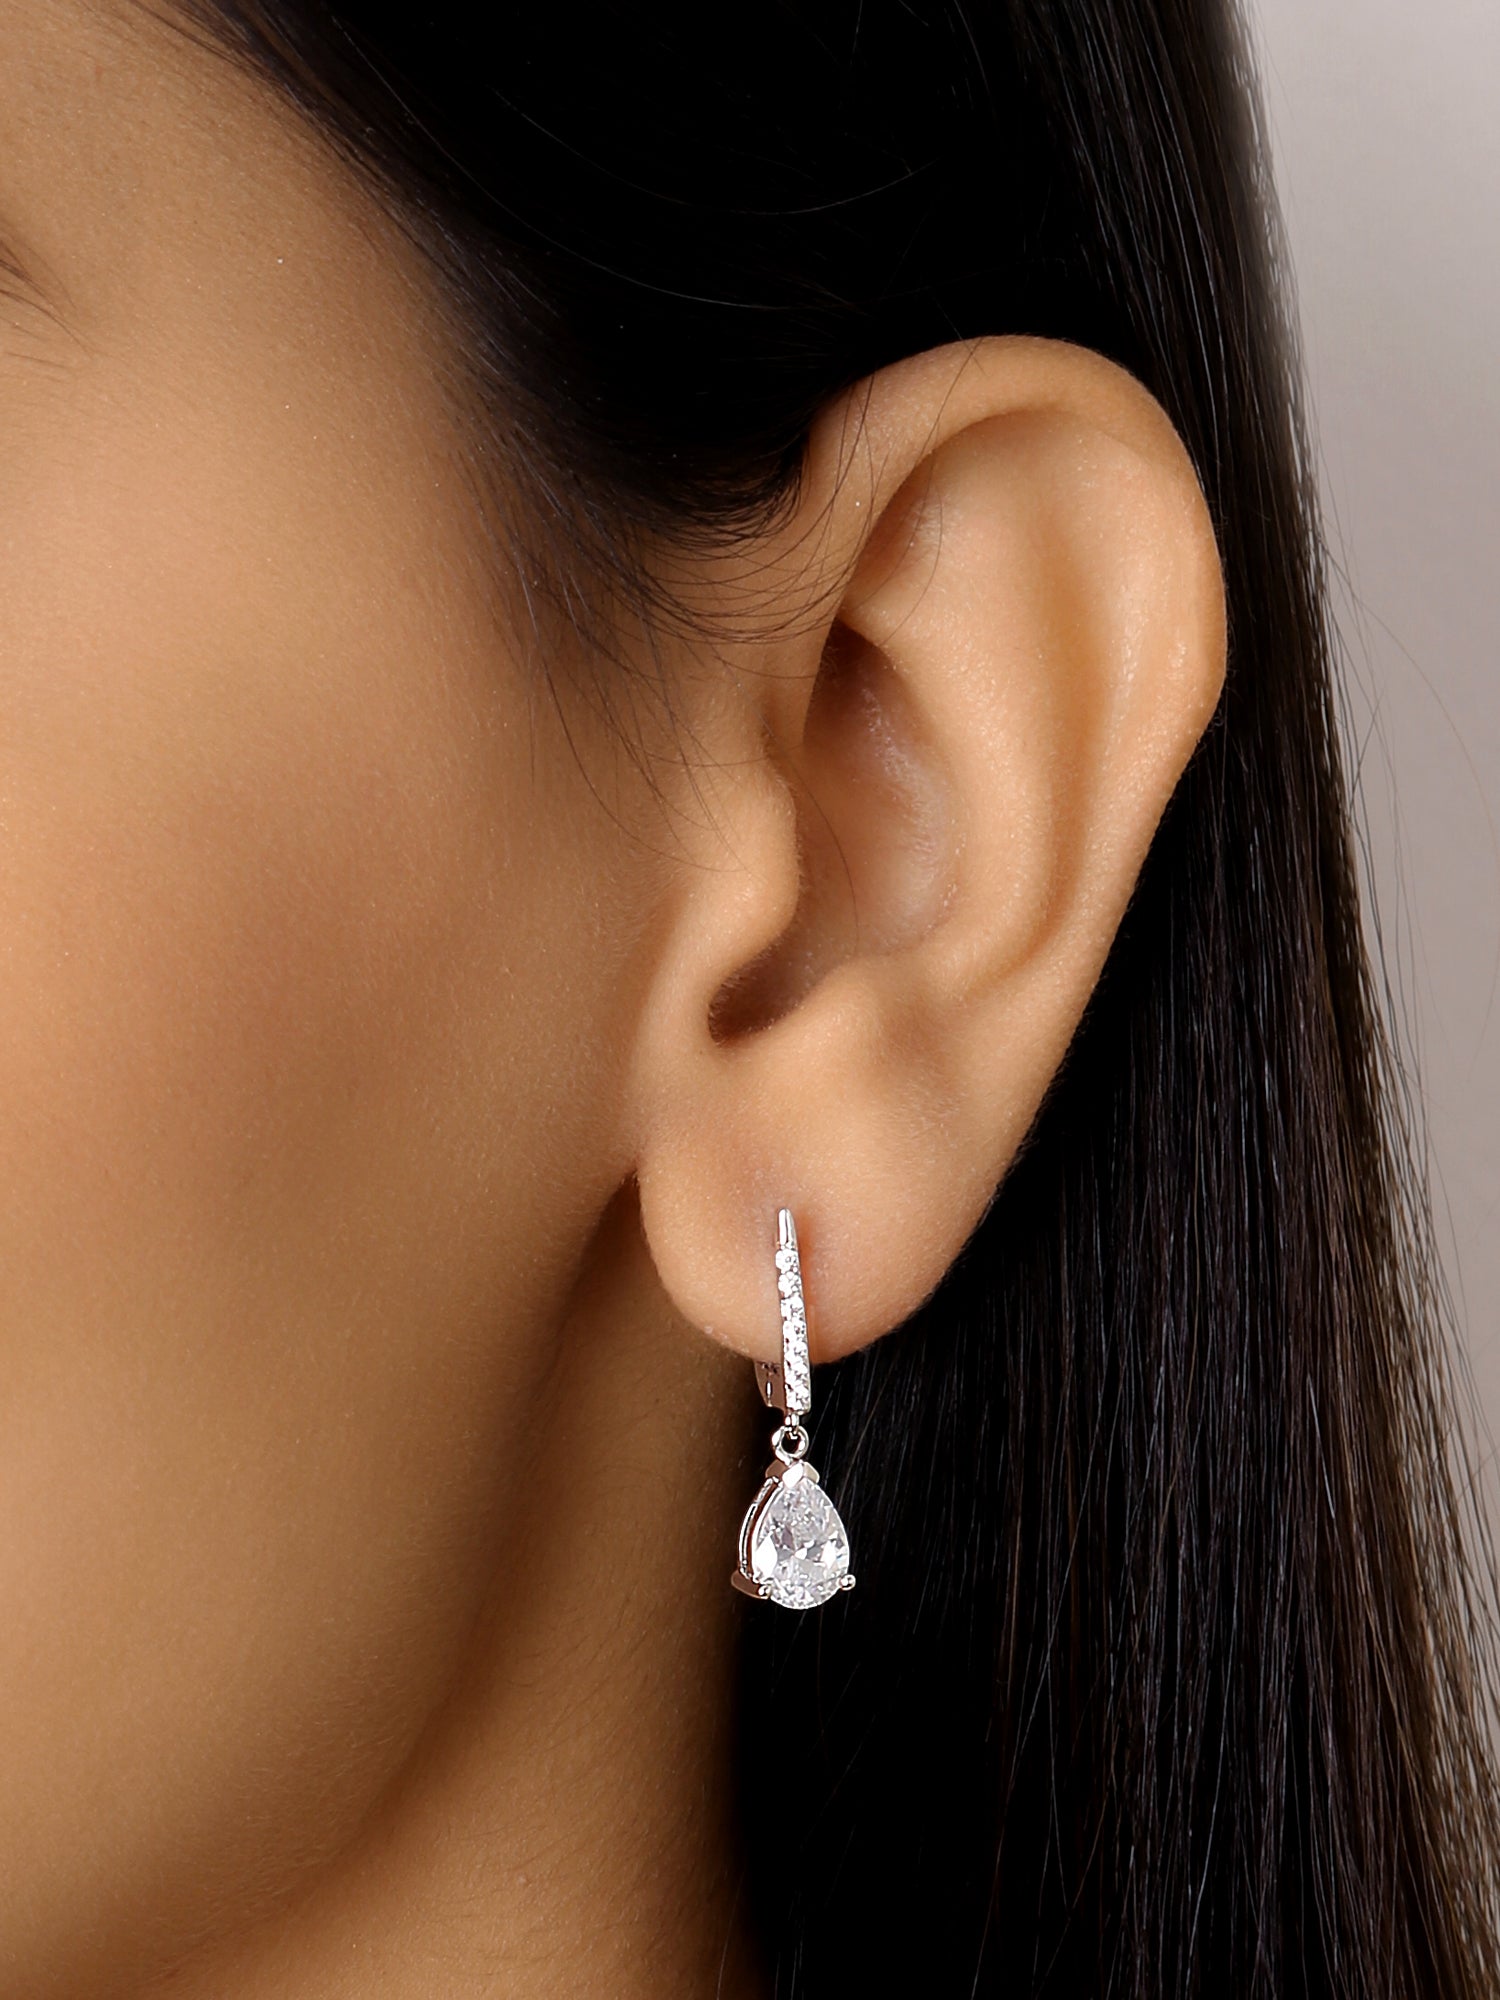 Aggregate more than 91 diamond dangle earrings on sale latest